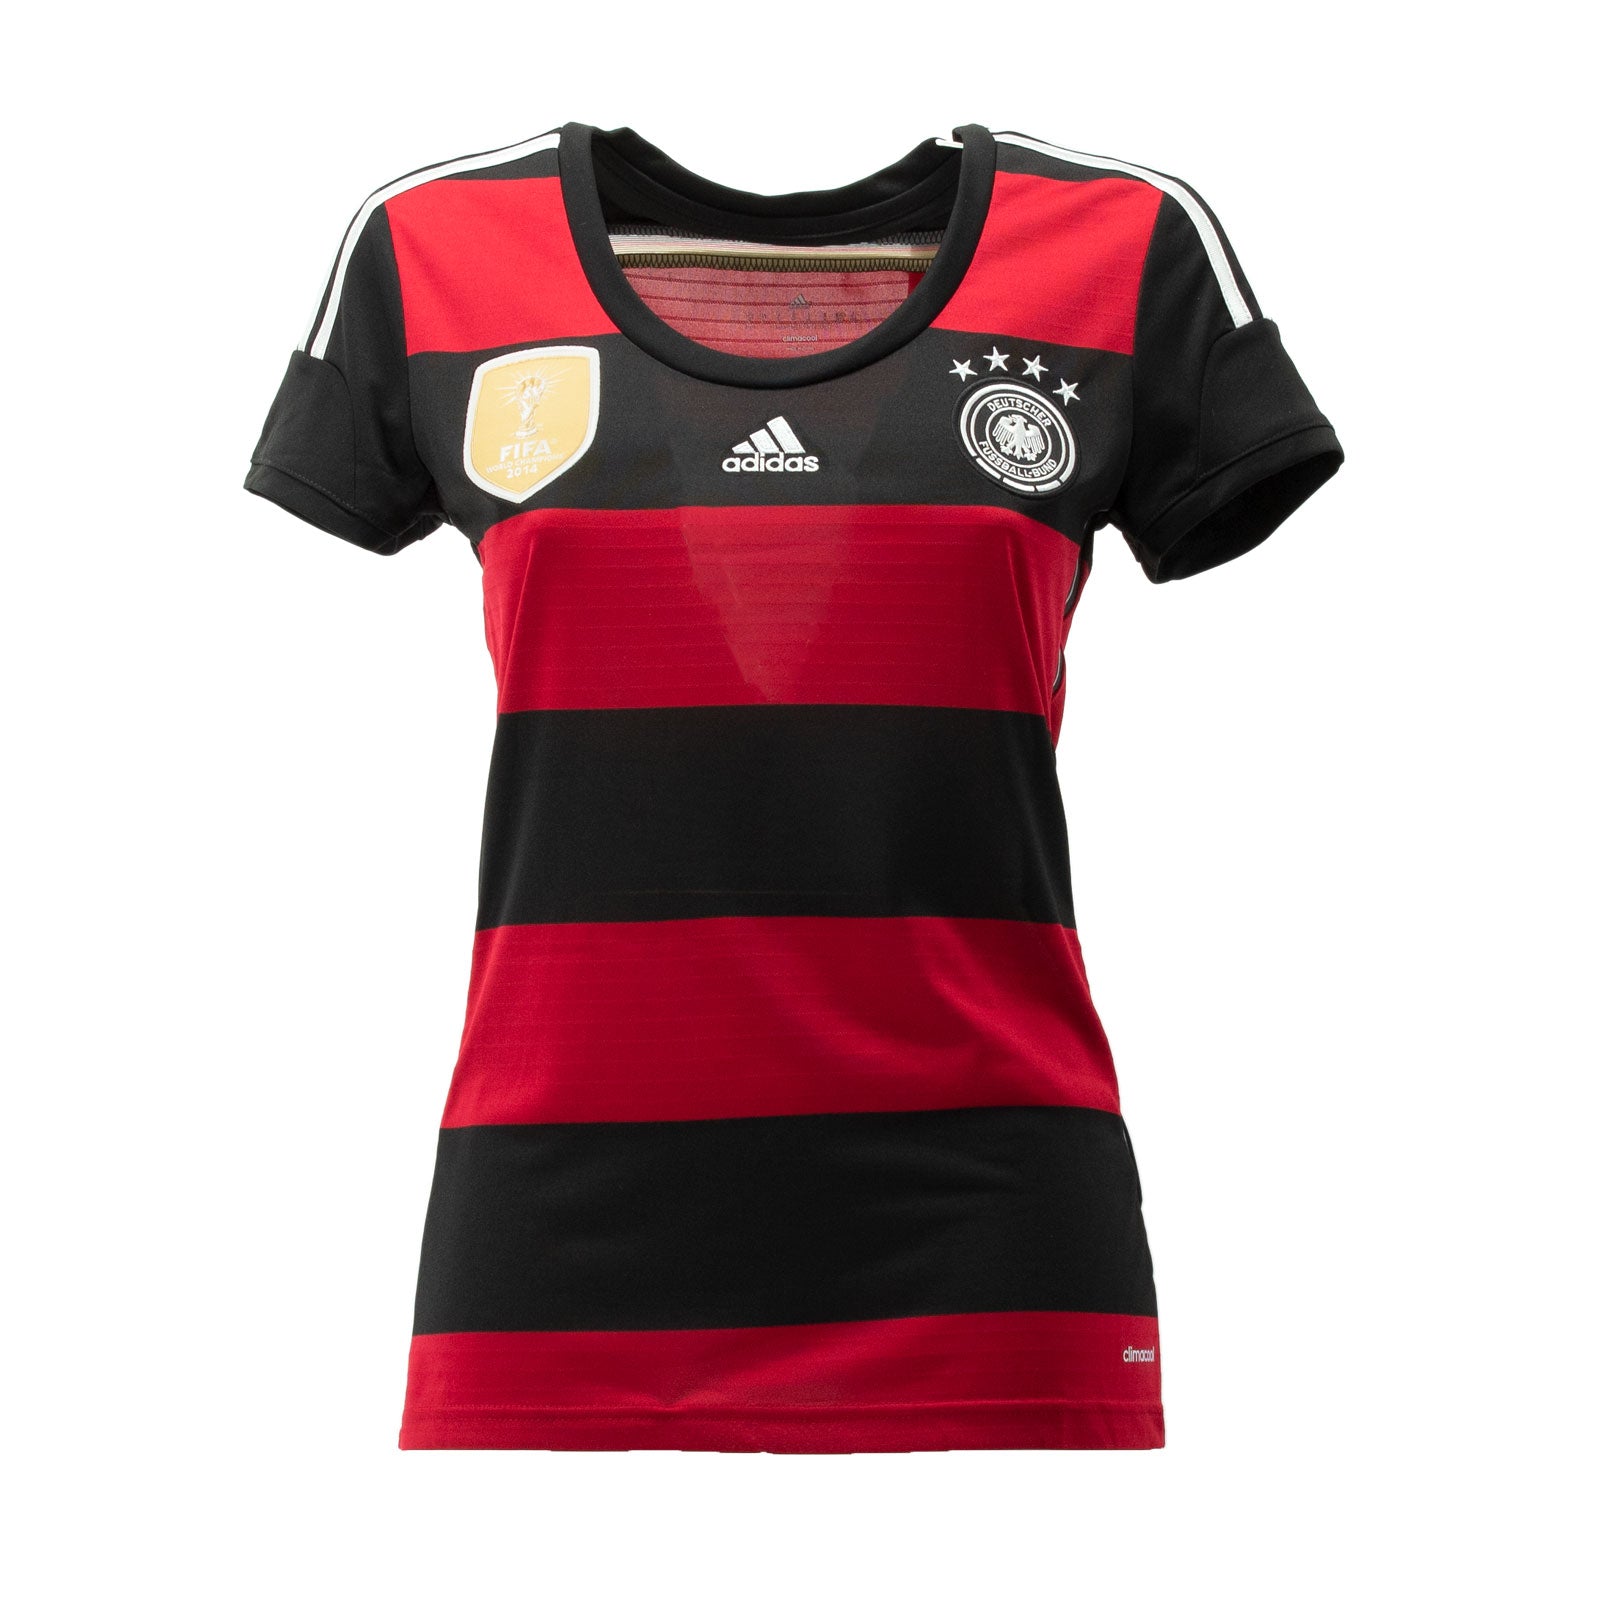 Adidas DFB Deutschland Germany AWAY Trikot World Cup Badge 2014 Damen S - AC1804